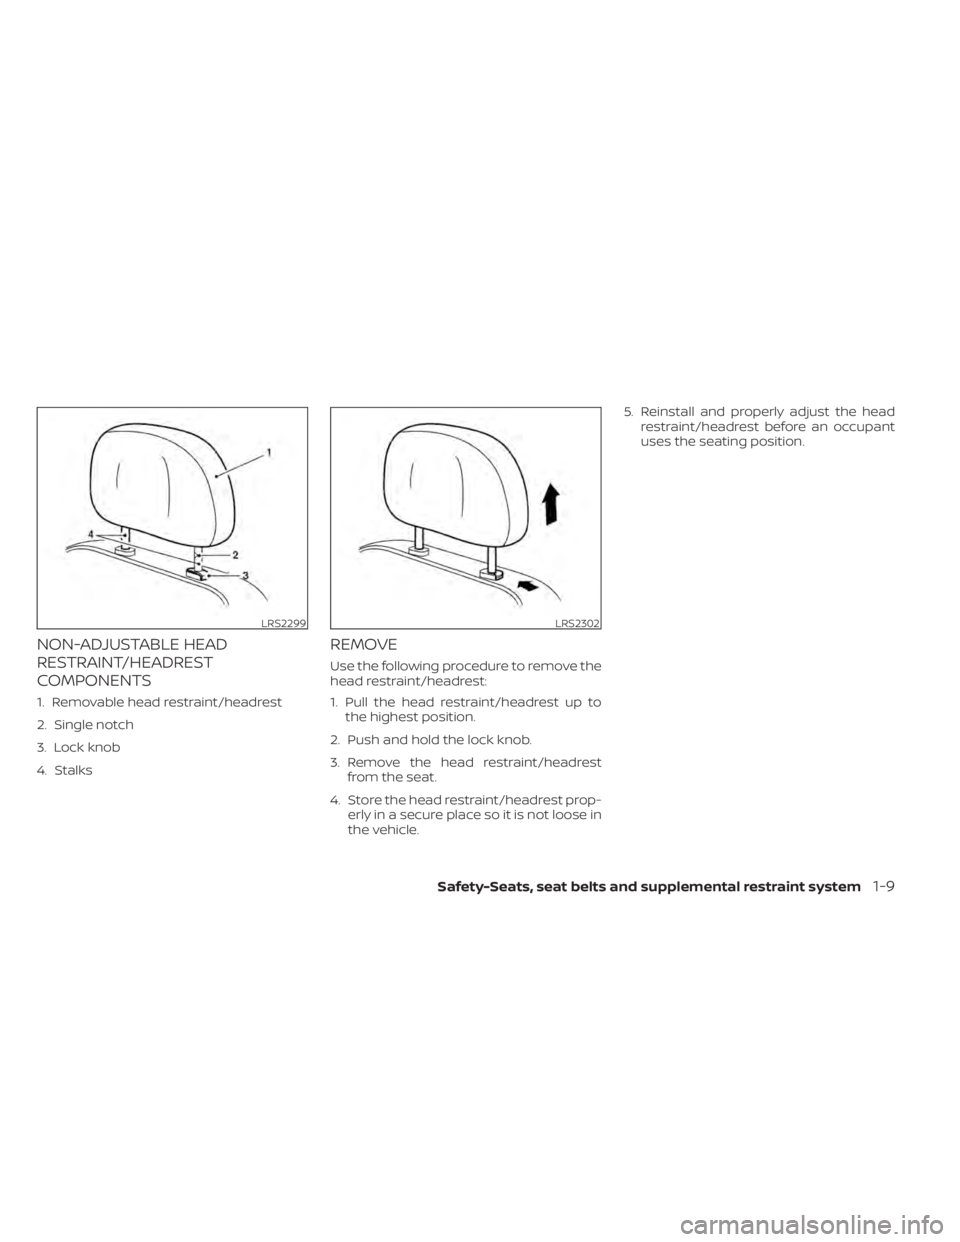 NISSAN SENTRA 2021 Owners Guide NON-ADJUSTABLE HEAD
RESTRAINT/HEADREST
COMPONENTS
1. Removable head restraint/headrest
2. Single notch
3. Lock knob
4. Stalks
REMOVE
Use the following procedure to remove the
head restraint/headrest:
